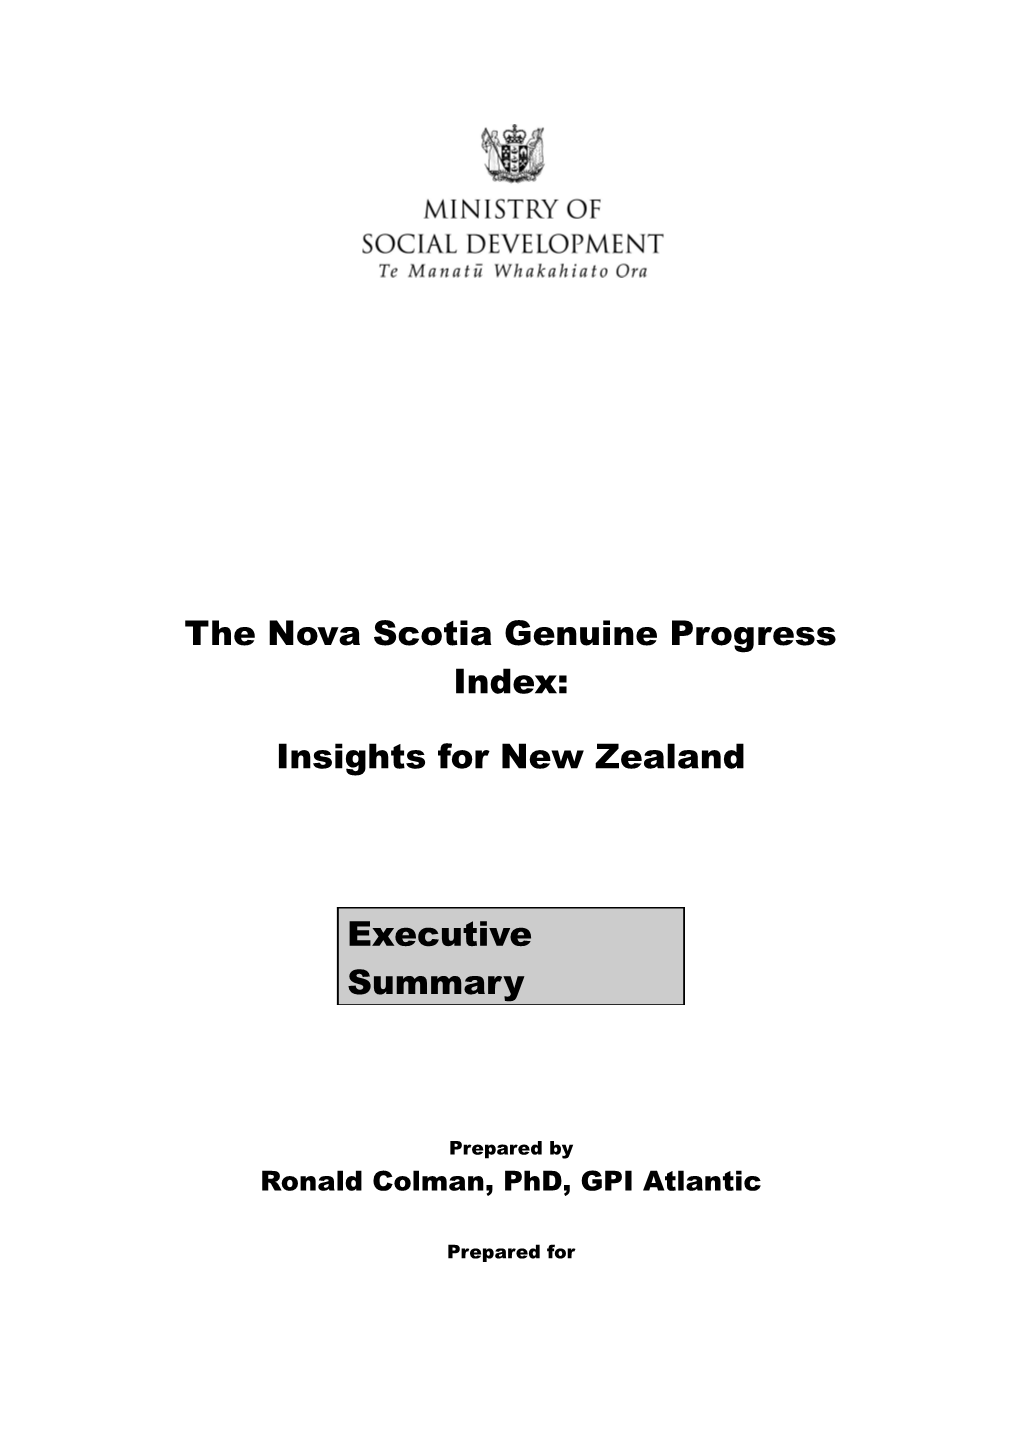 The Nova Scotia Genuine Progress Index